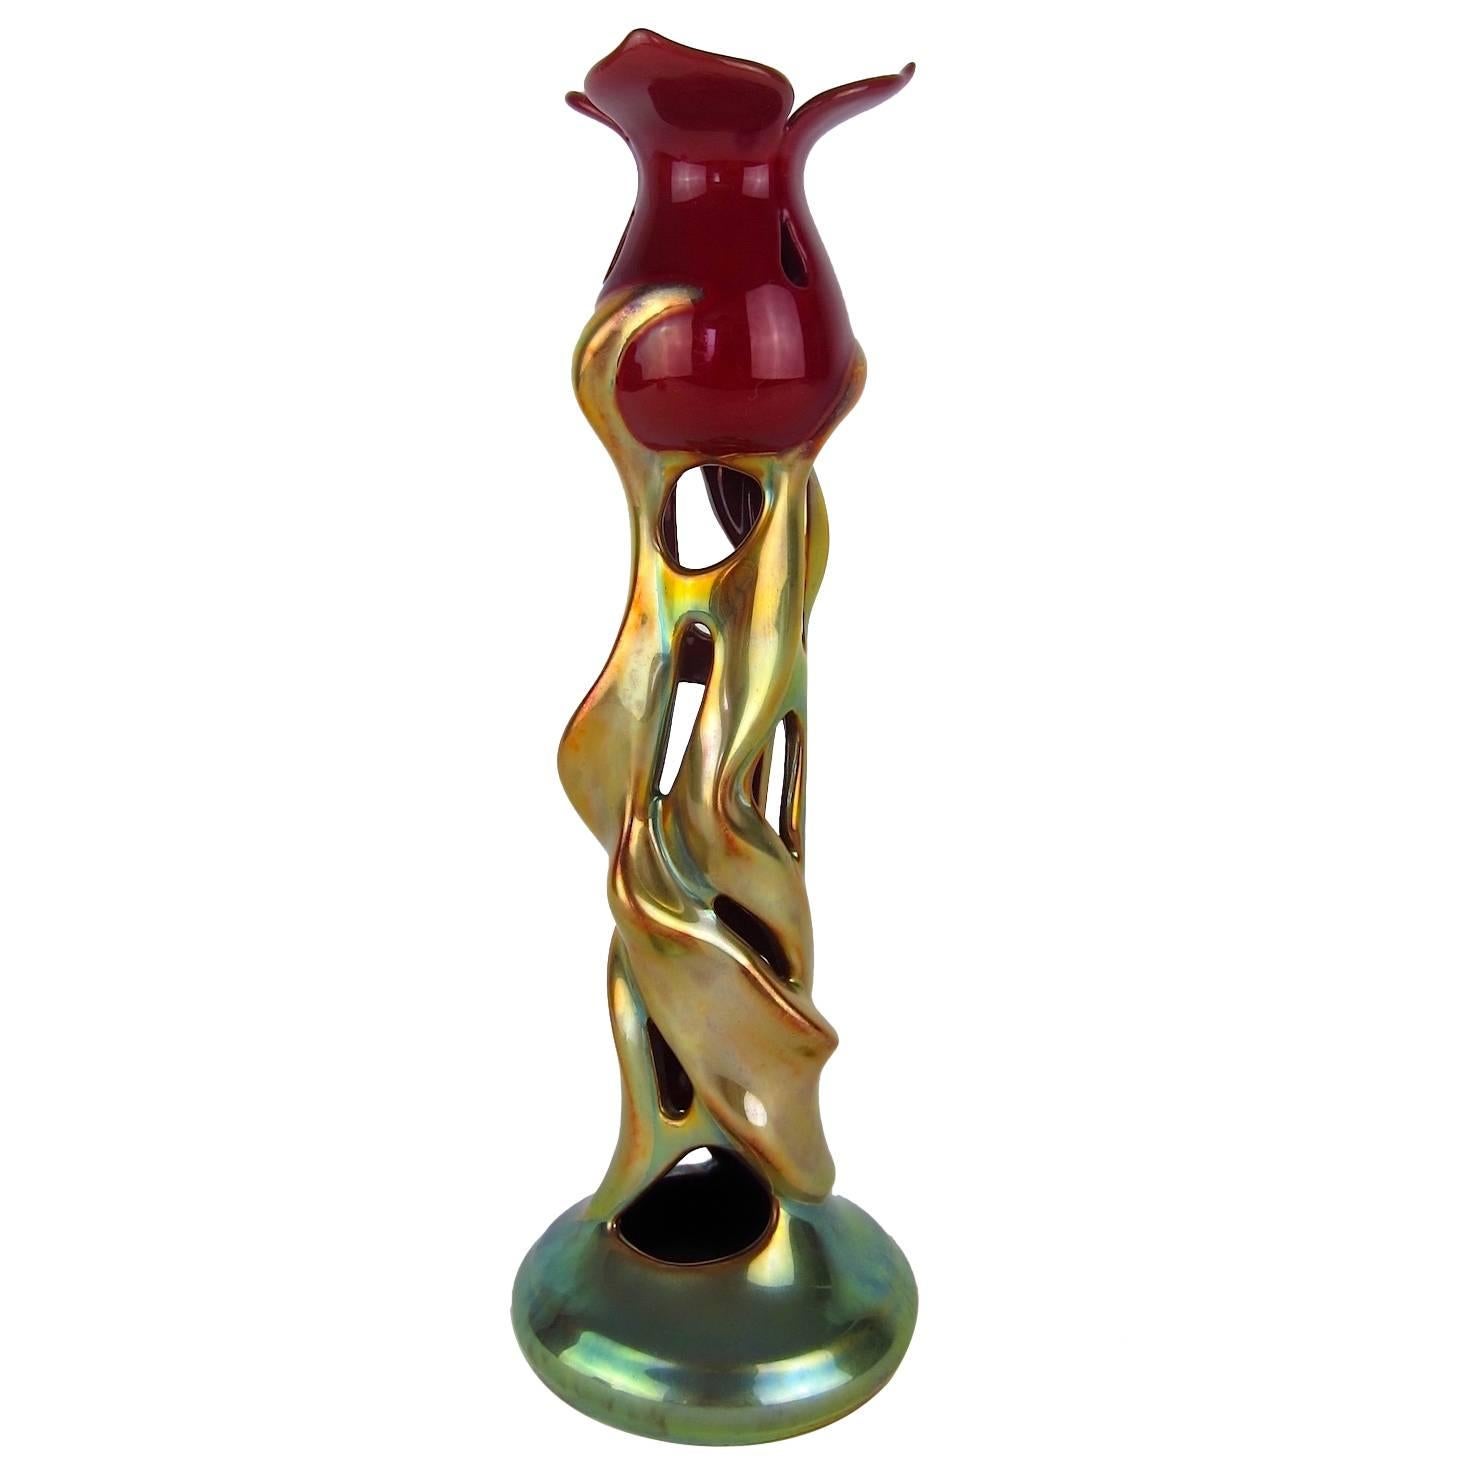 Zsolnay Art Nouveau Porcelain Tulip Candlestick with Eosin Glaze